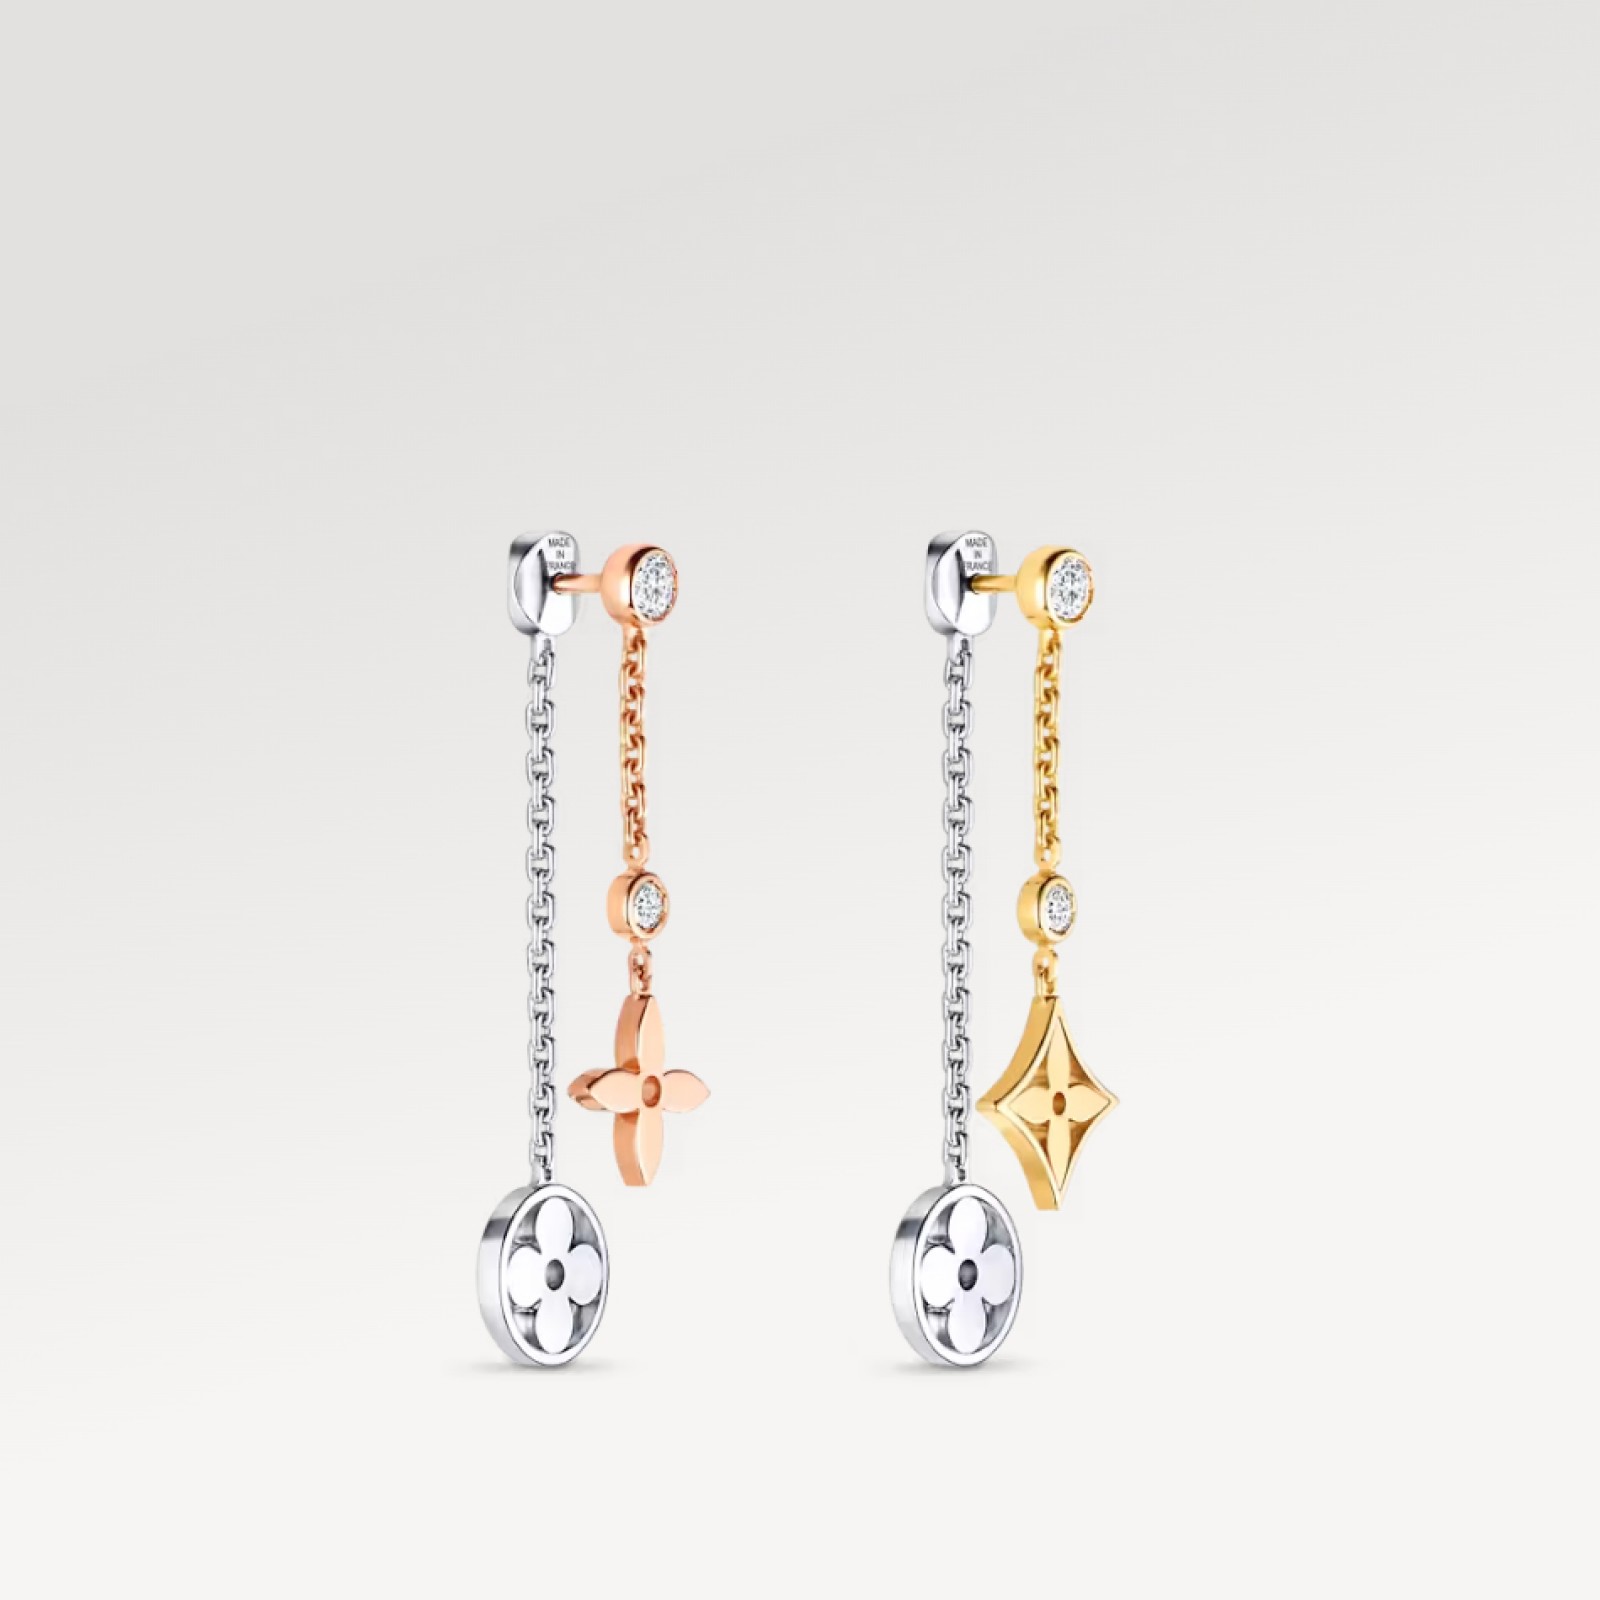 Blossom long earrings, 3 golds and diamonds